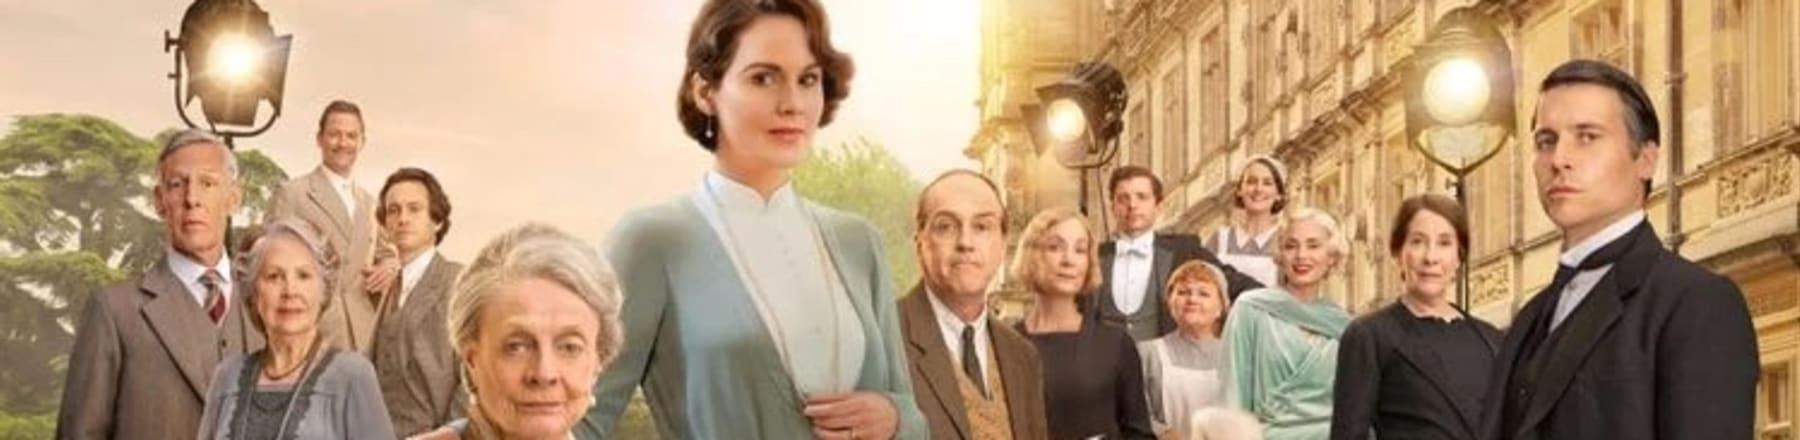 Downton Abbey: A New Era promotional photo